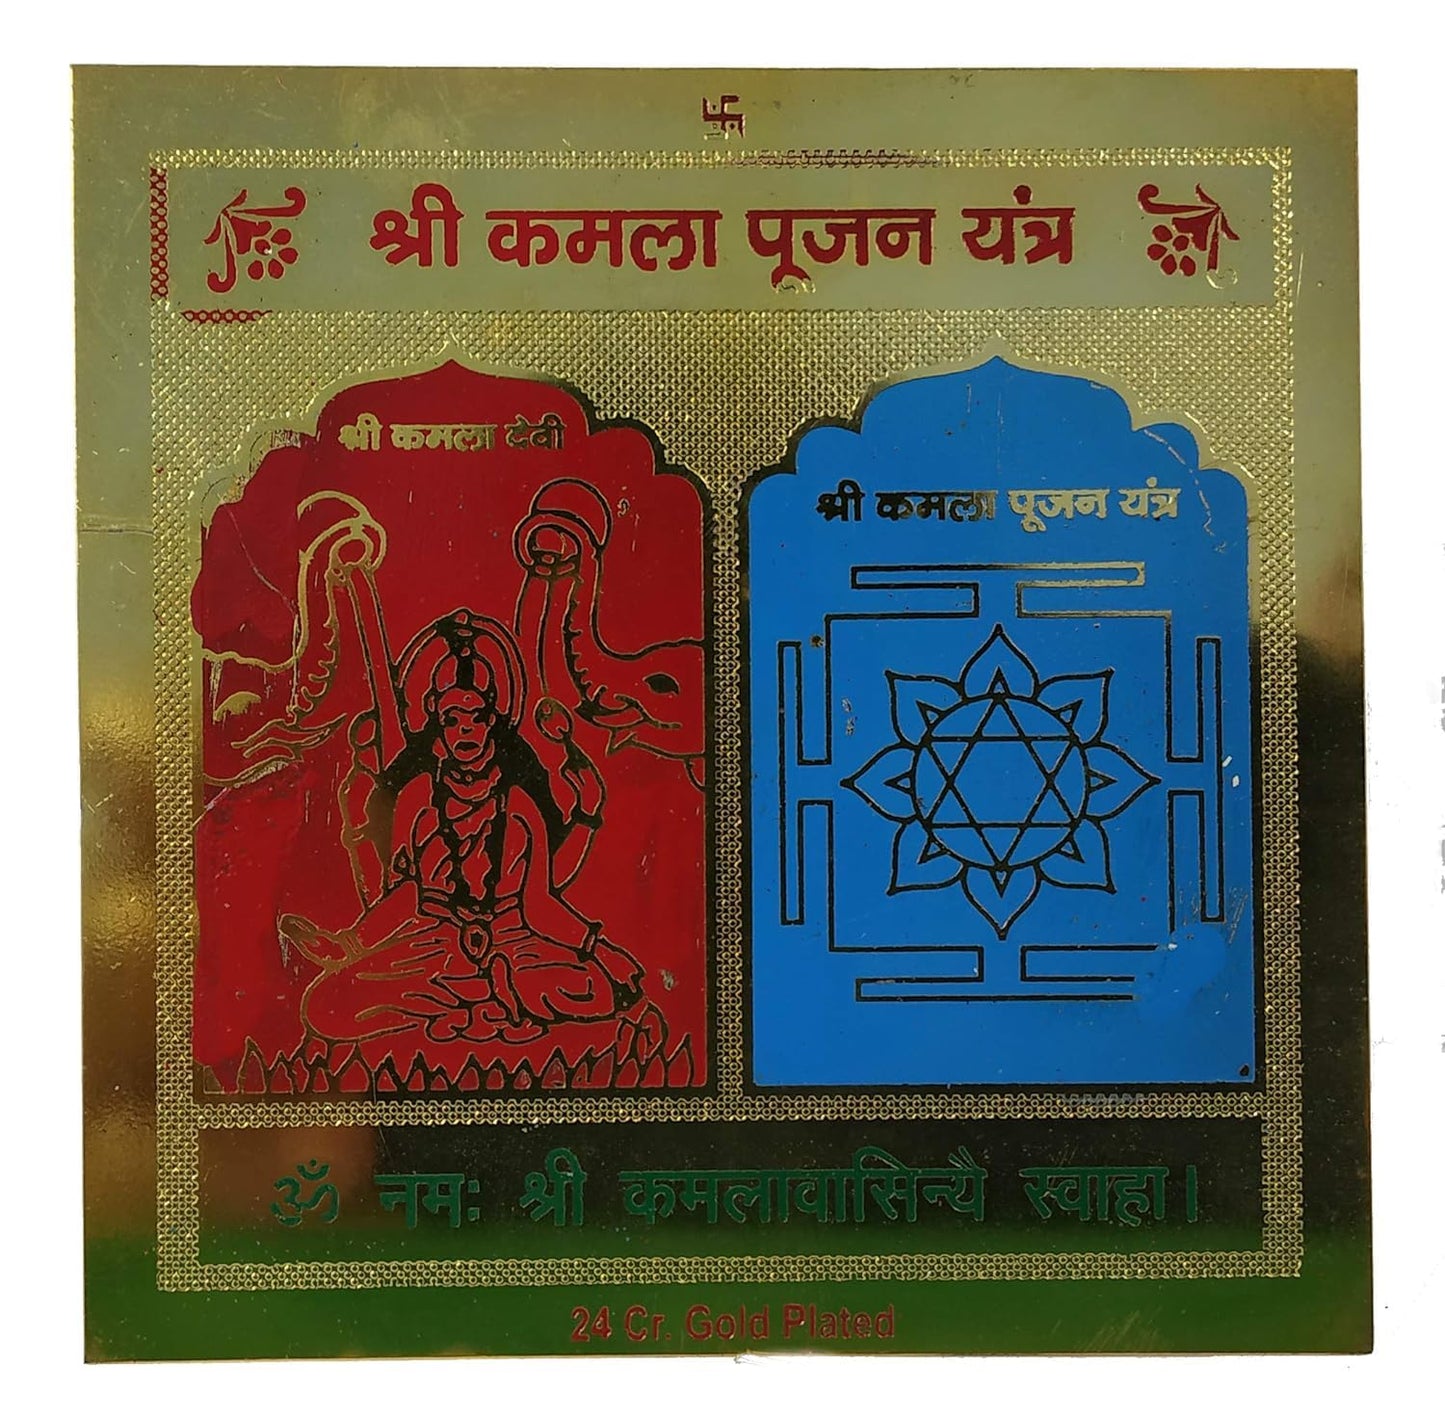 Pujahome Original Kamla Yantra - 3.25x3.25 Inch, Gold Polished, Spiritual Enhancer for Prosperity and Harmony